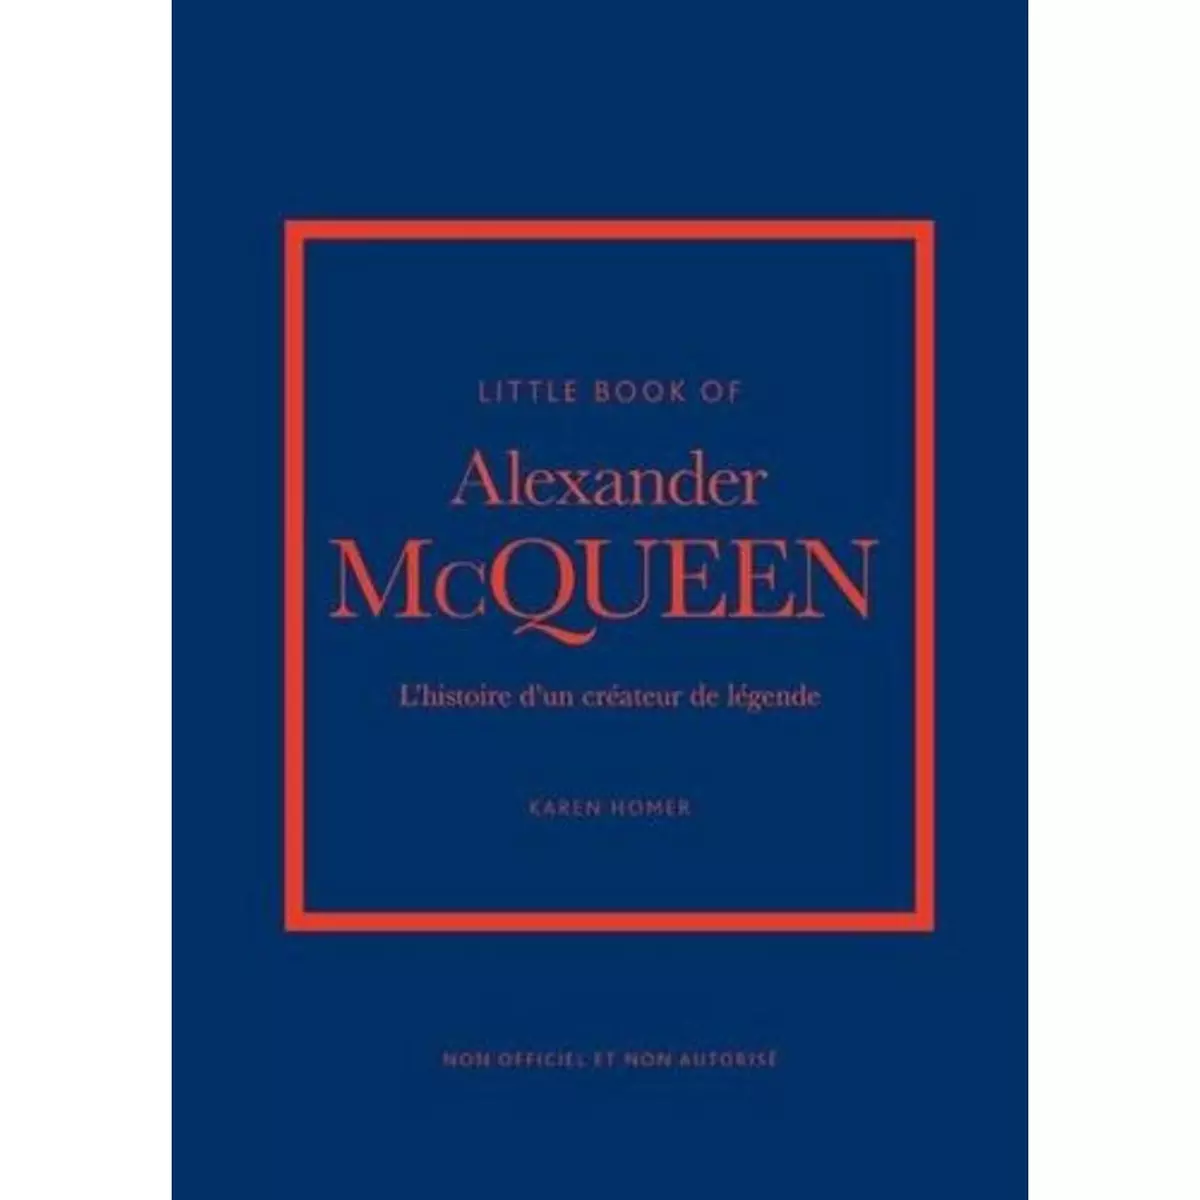  LITTLE BOOK OF ALEXANDER MCQUEEN. L'HISTOIRE D'UN CREATEUR DE LEGENDE, Homer Karen